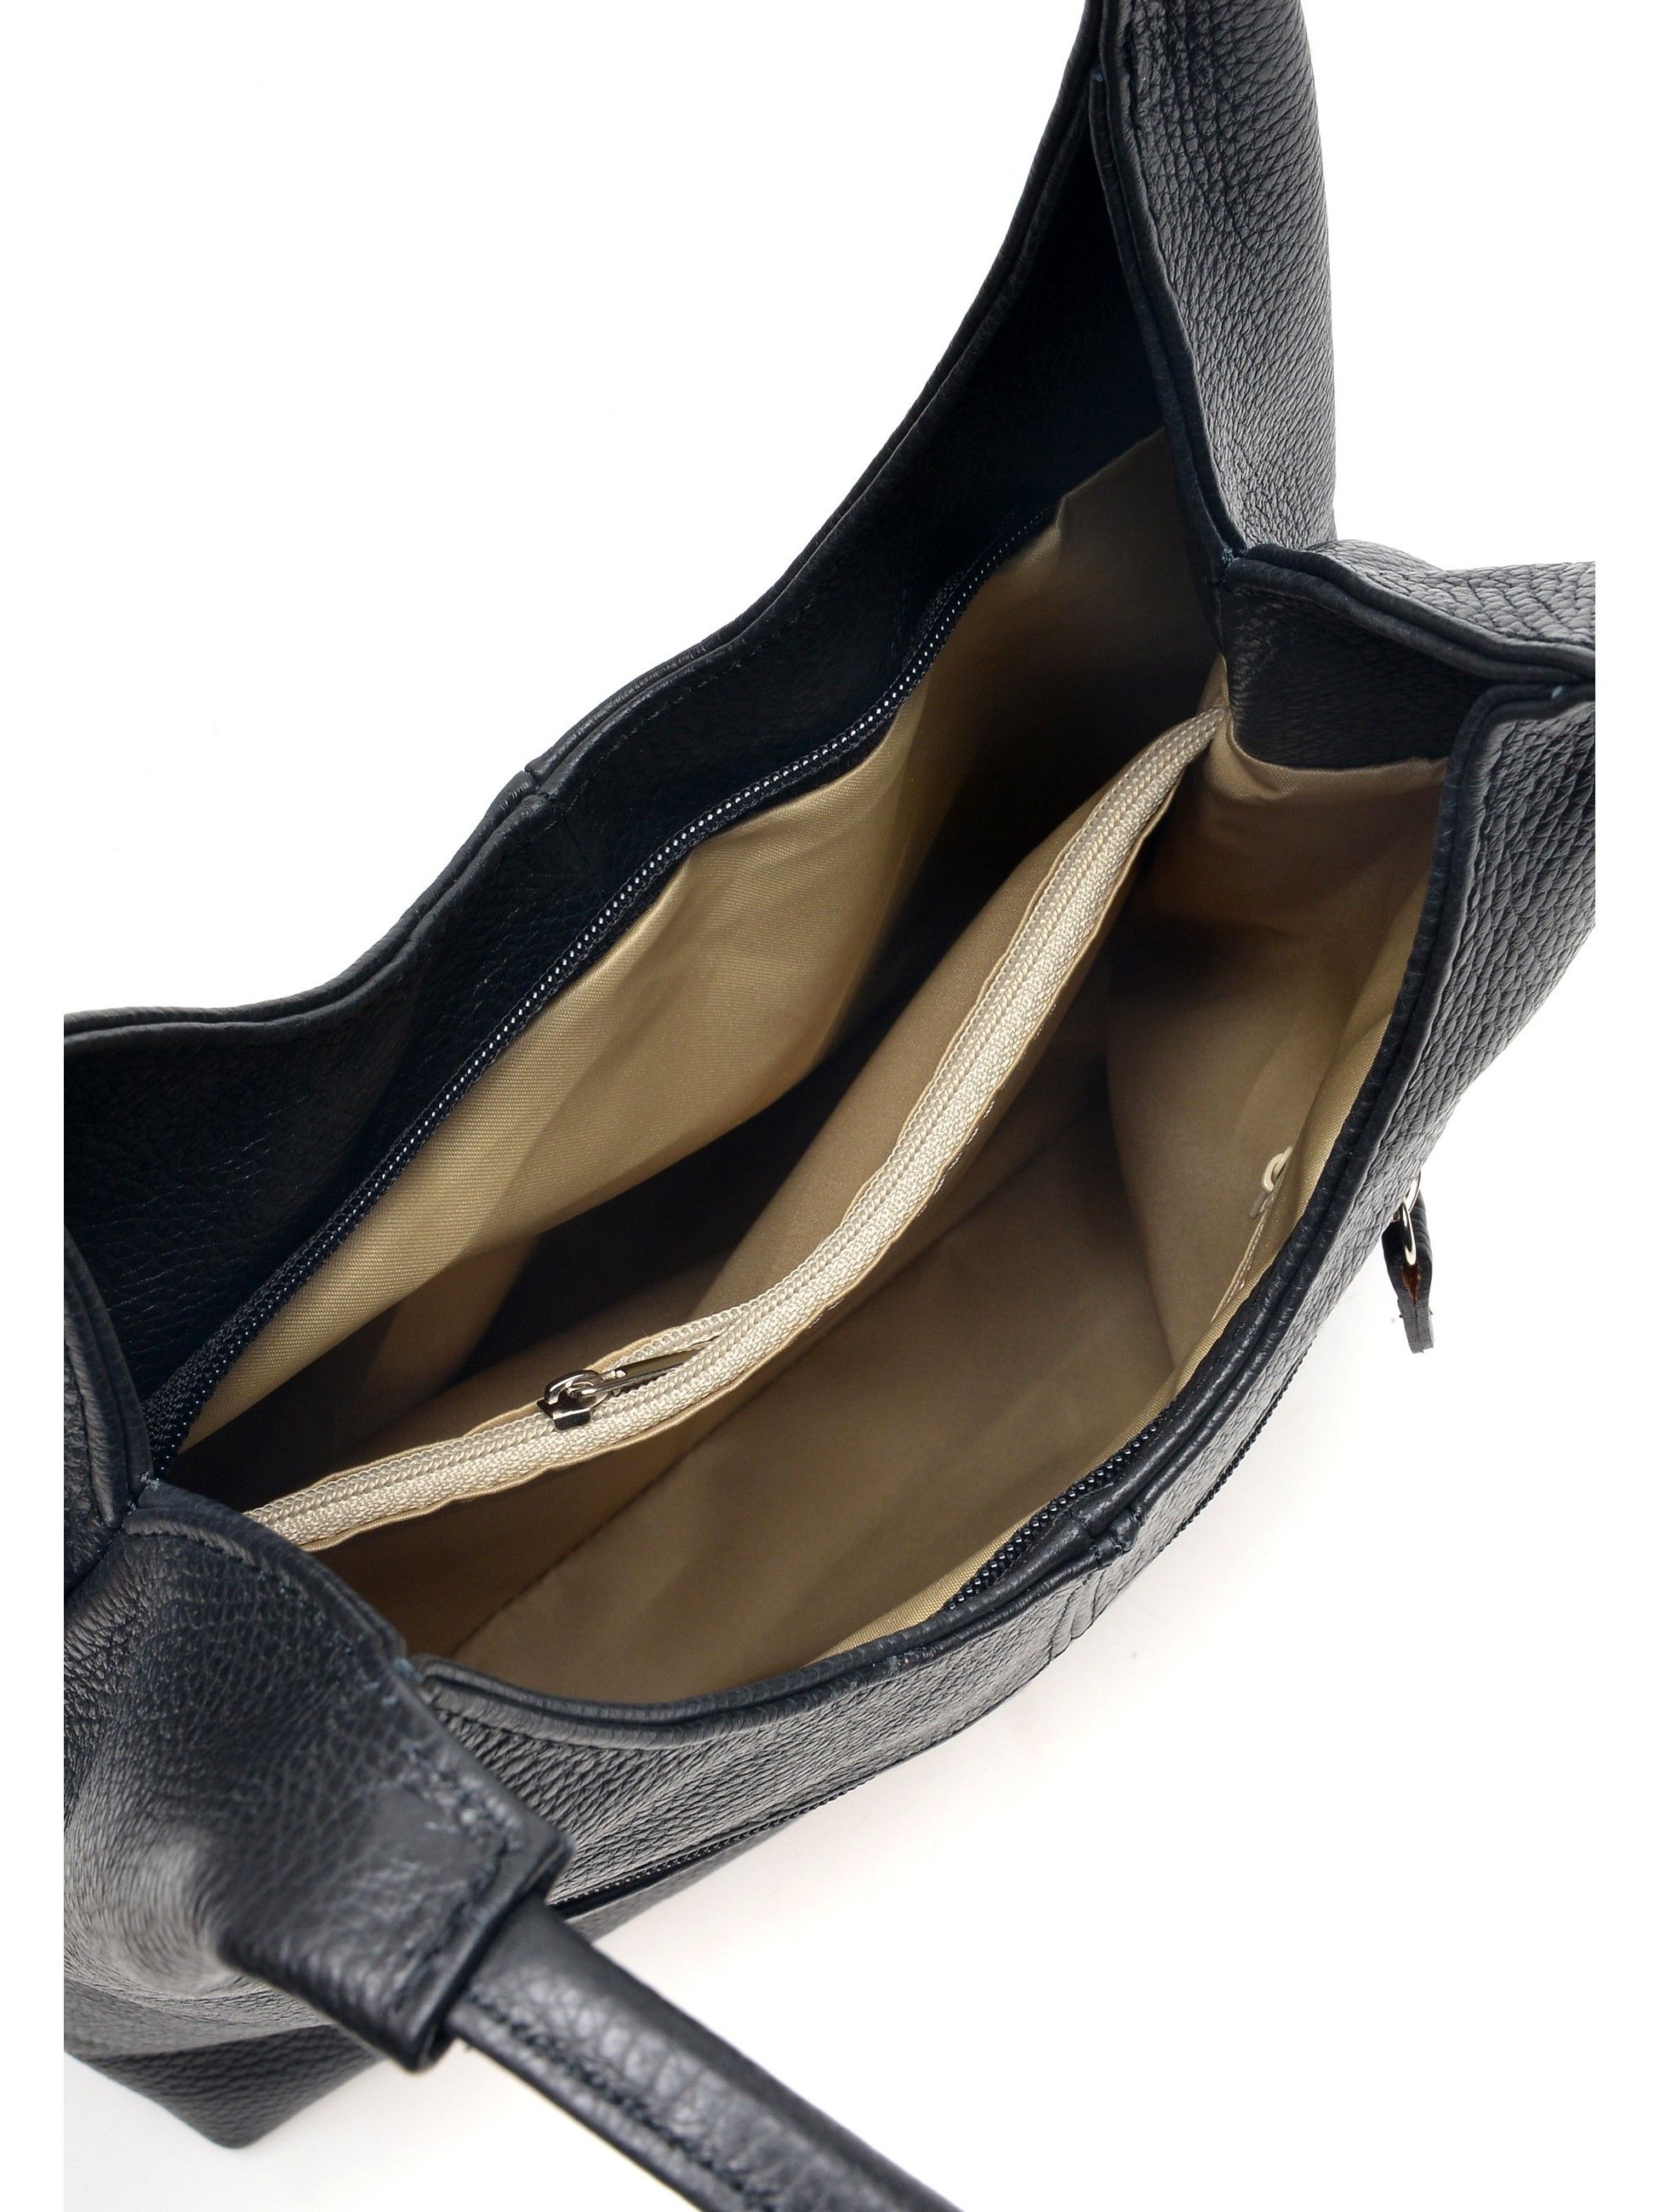 Shoulder Bag
100% cow leather
Top zip closure
Double compartment bag
Inner zipped compartment
Interior zip pocket
Back zip pocket
Dimensions (L):39x34x8.5 cm
Handle: 52 cm
Shoulder strap:/